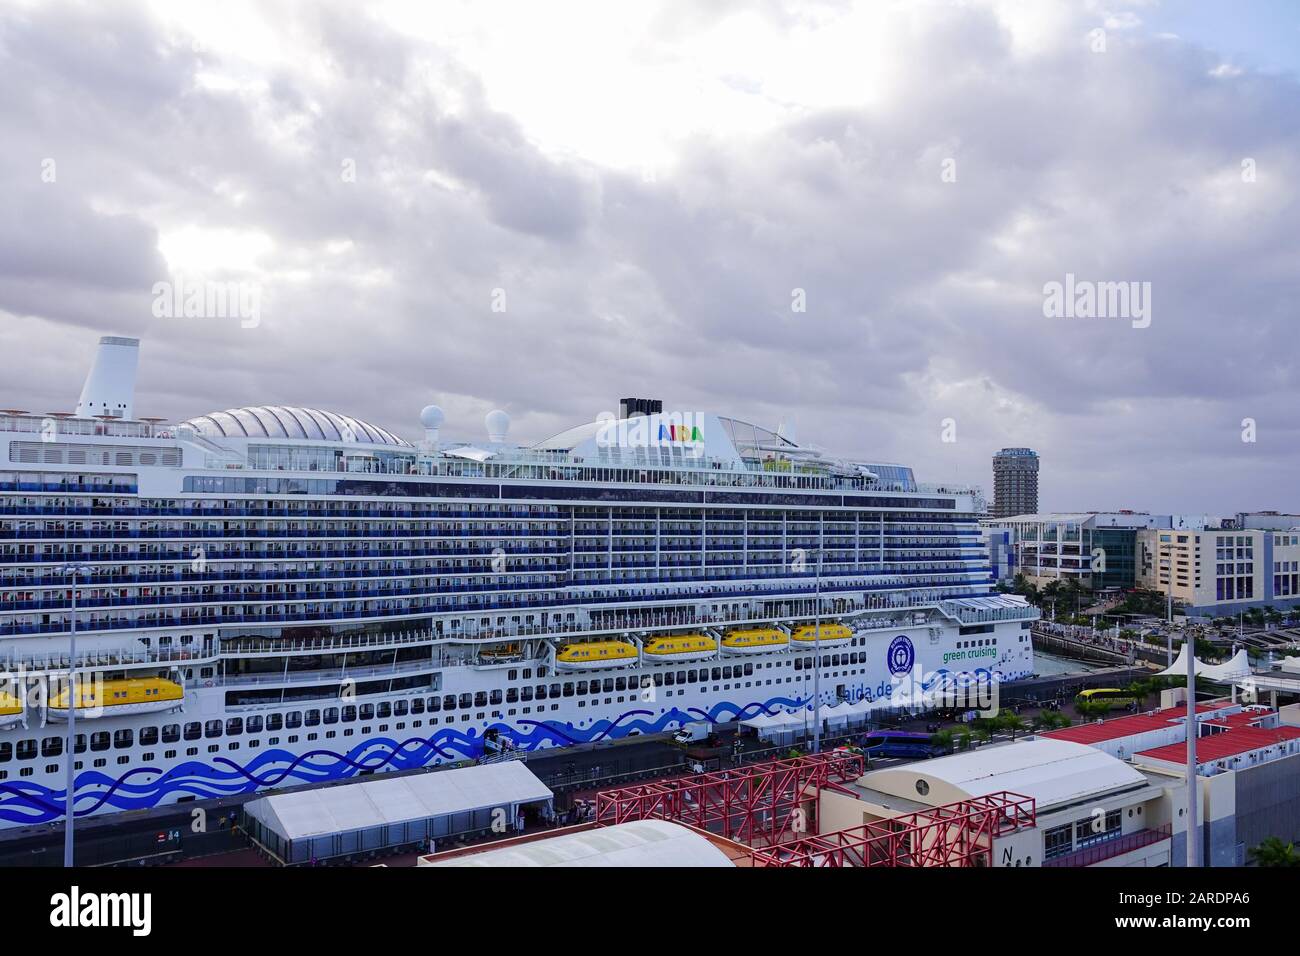 Las palmas gran canaria cruise ship hi-res stock photography and images -  Page 2 - Alamy